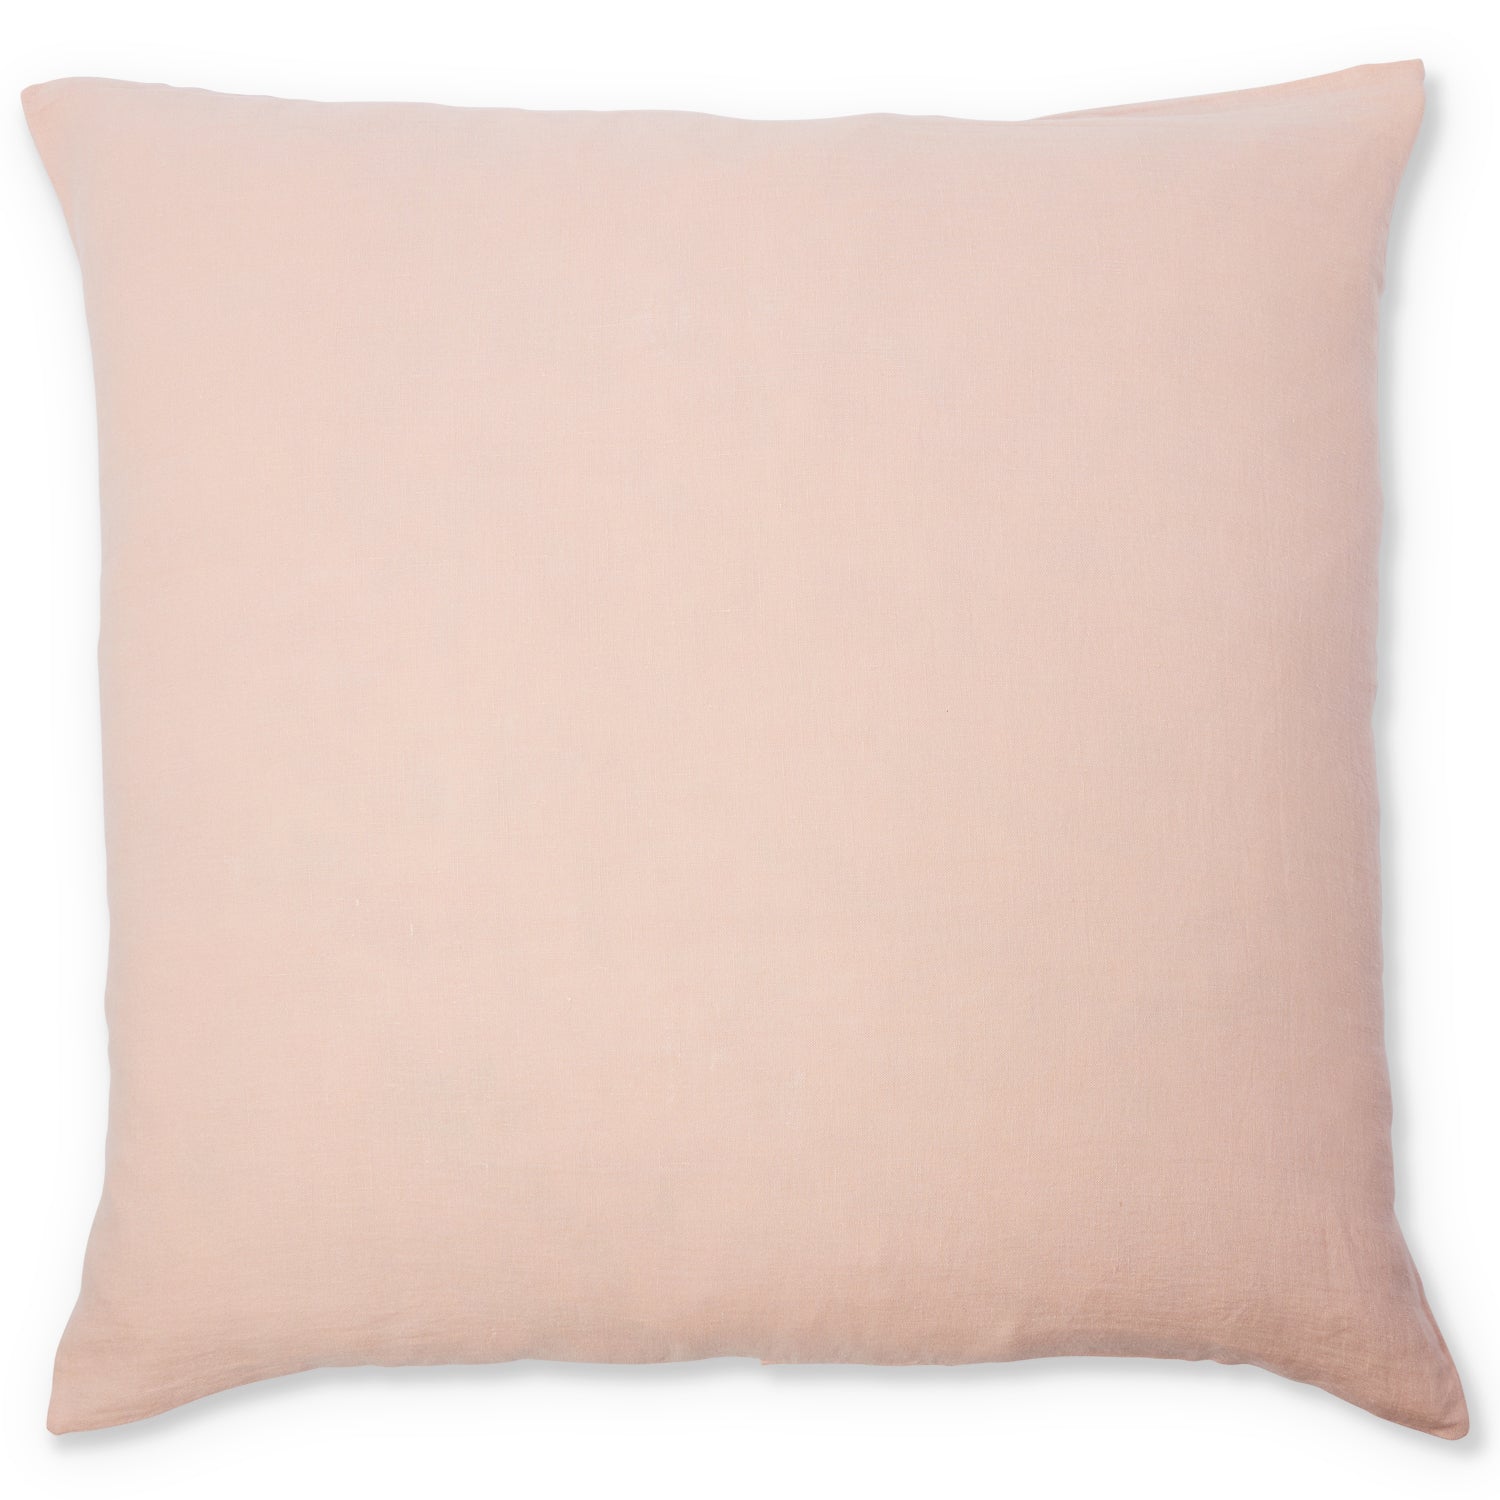 Staples Euro Linen Pillowcase - Rose